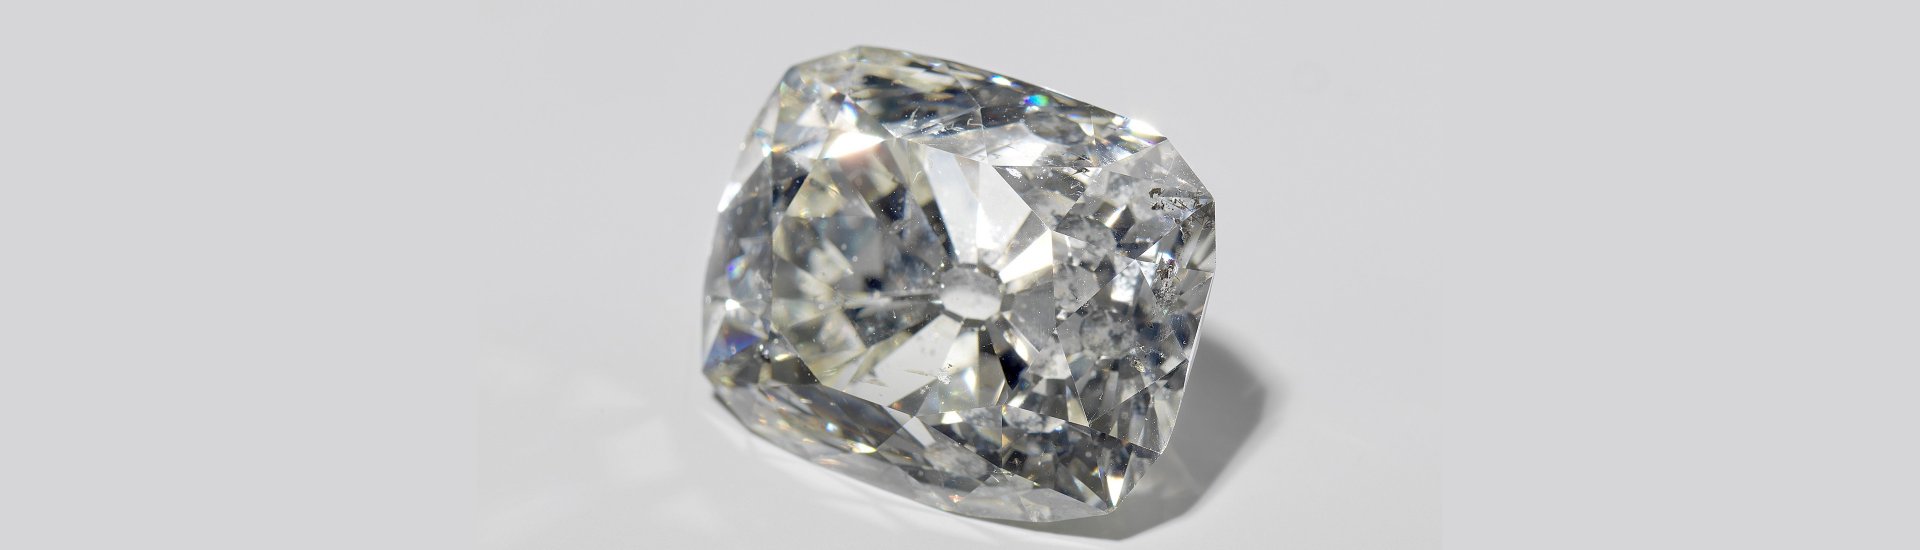 De diamant van Banjarmasin. Deze diamant is oorlogsbuit. (Foto: Rijksmuseum Amsterdam)